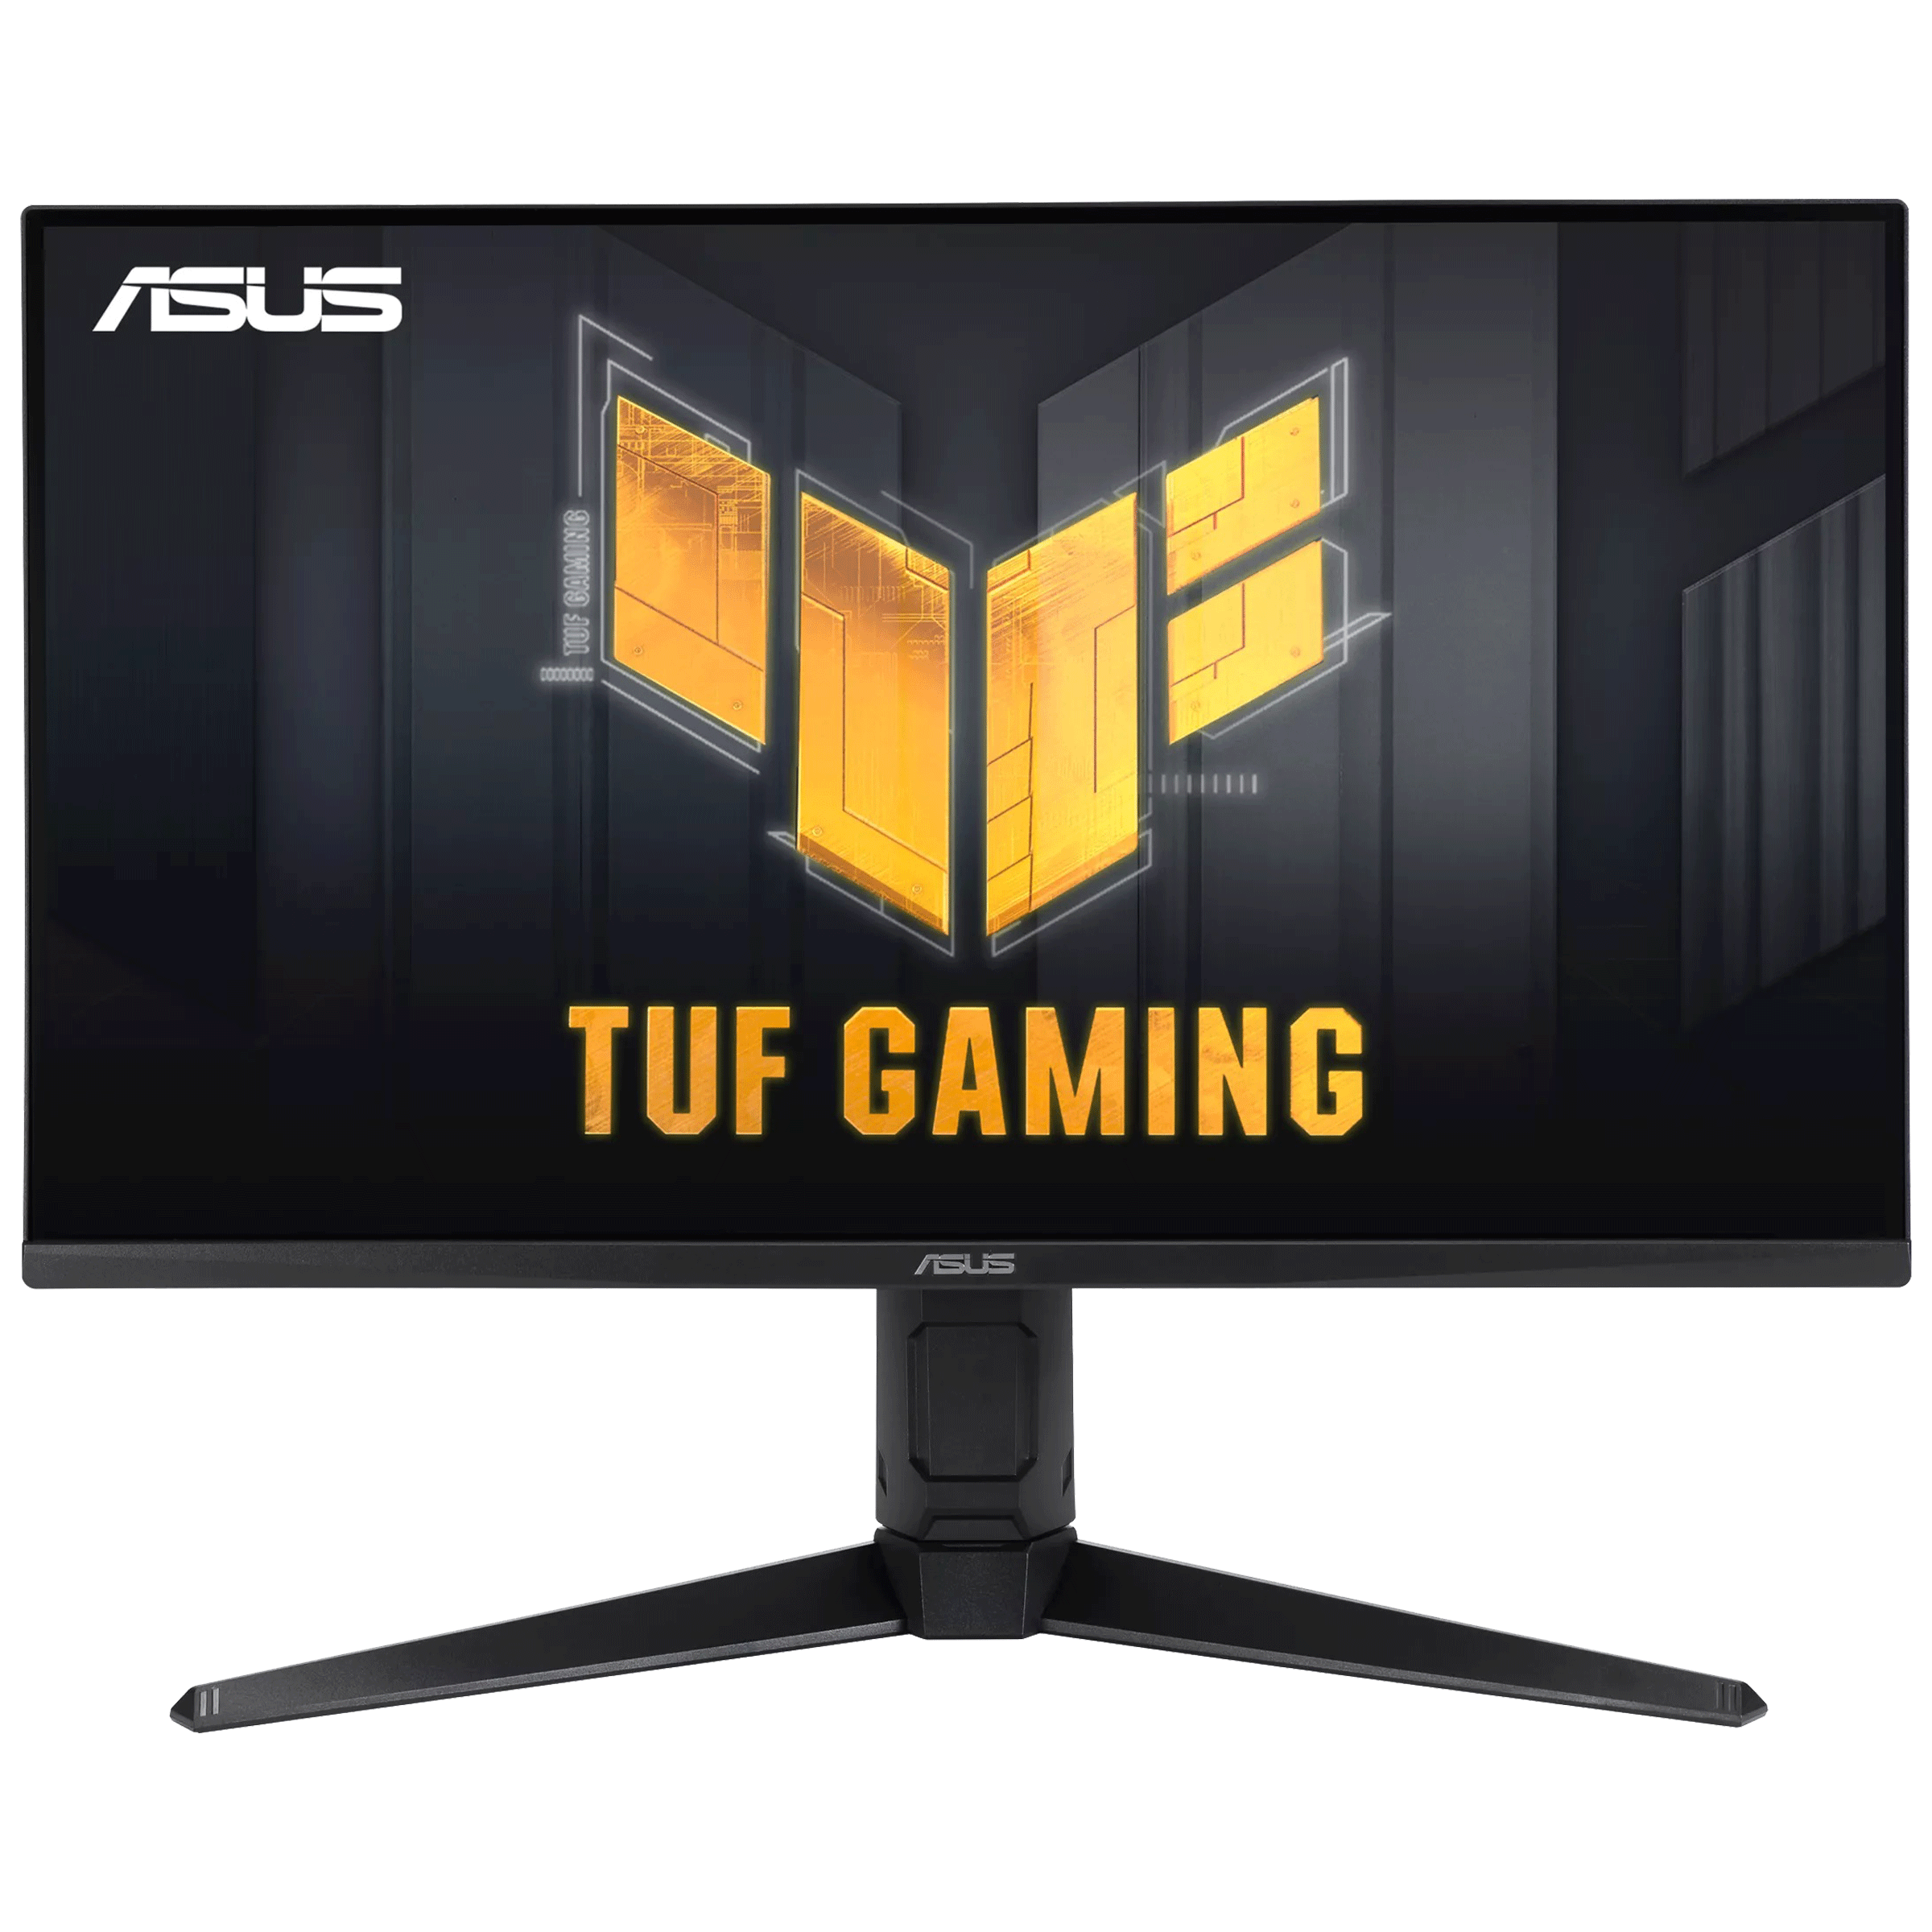 ASUS TUF Gaming 71.12cm (28 Inches) Ultra HD 4K Flat Panel Gaming Monitor (AMD FreeSync, HDMI, 144Hz, VG28UQL1A, Black)_1